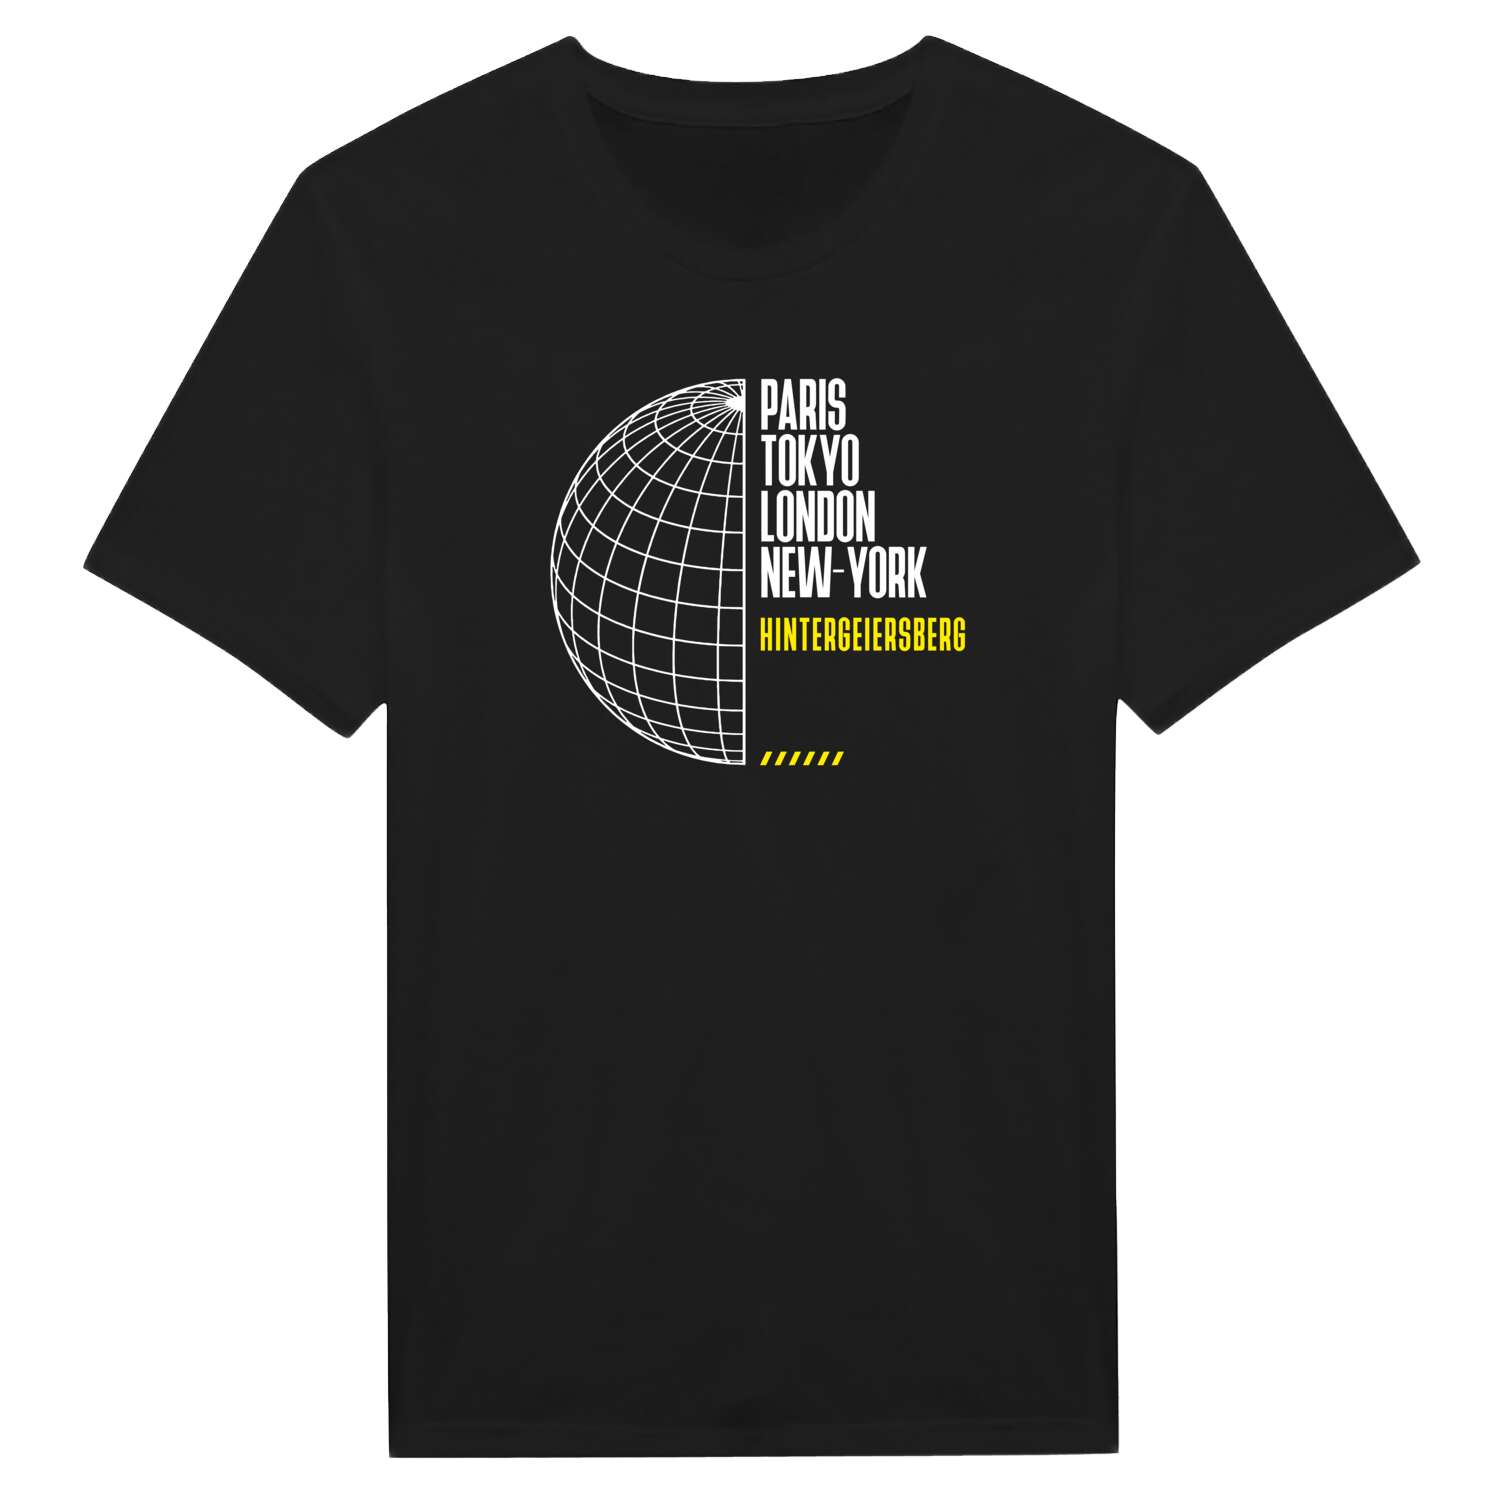 Hintergeiersberg T-Shirt »Paris Tokyo London«